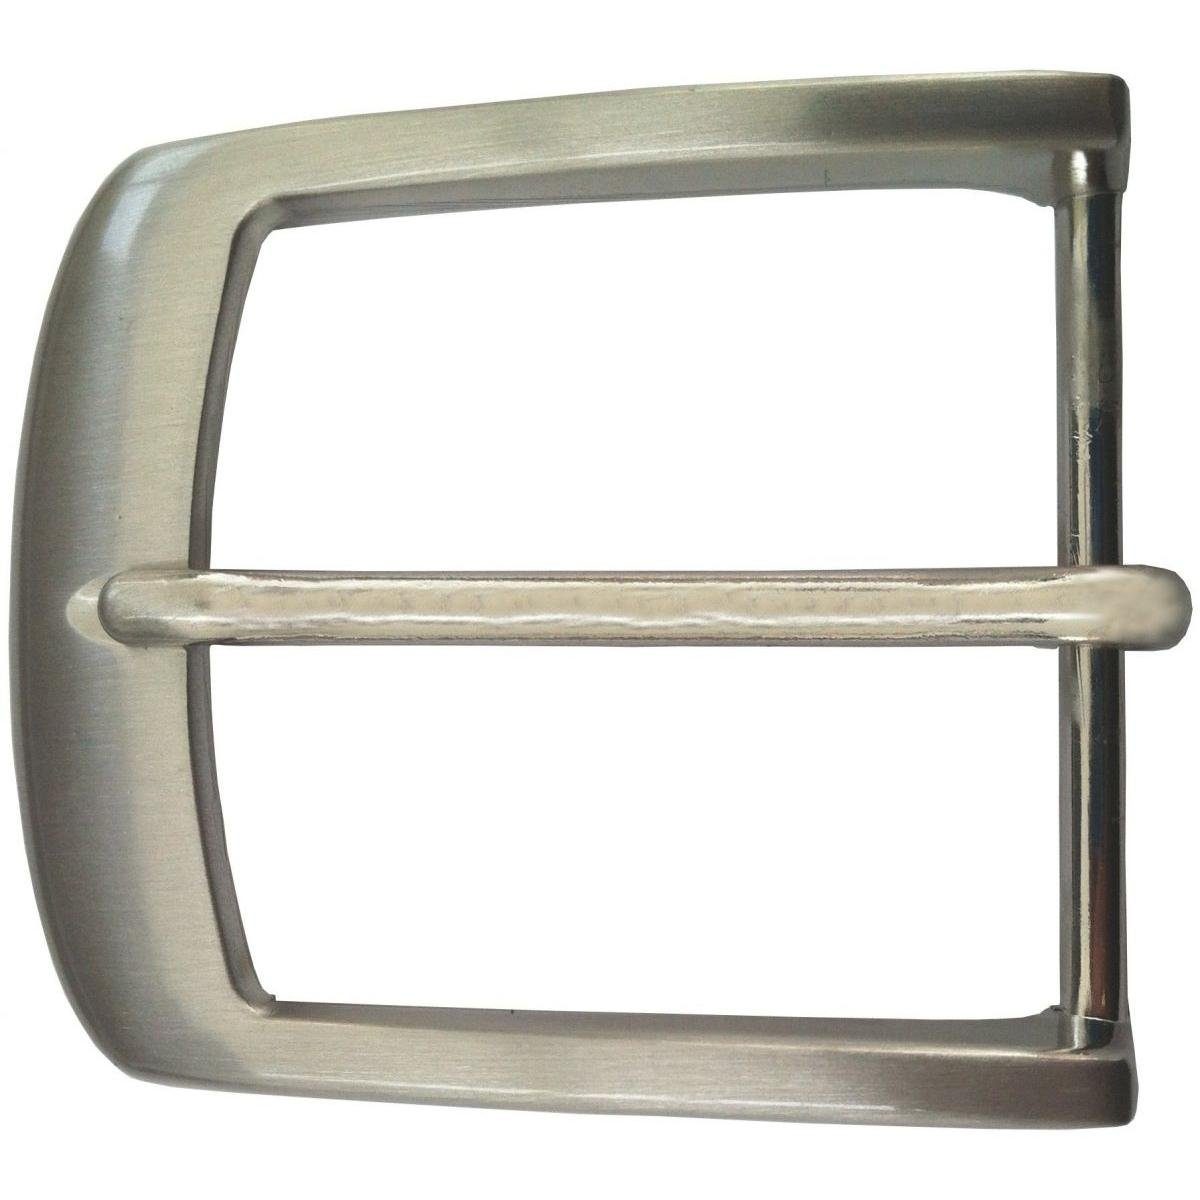 BELTINGER Gürtelschnalle 4,0 cm - Wechselschließe Gürtelschließe 40mm - Dorn-Schließe - Gürtel